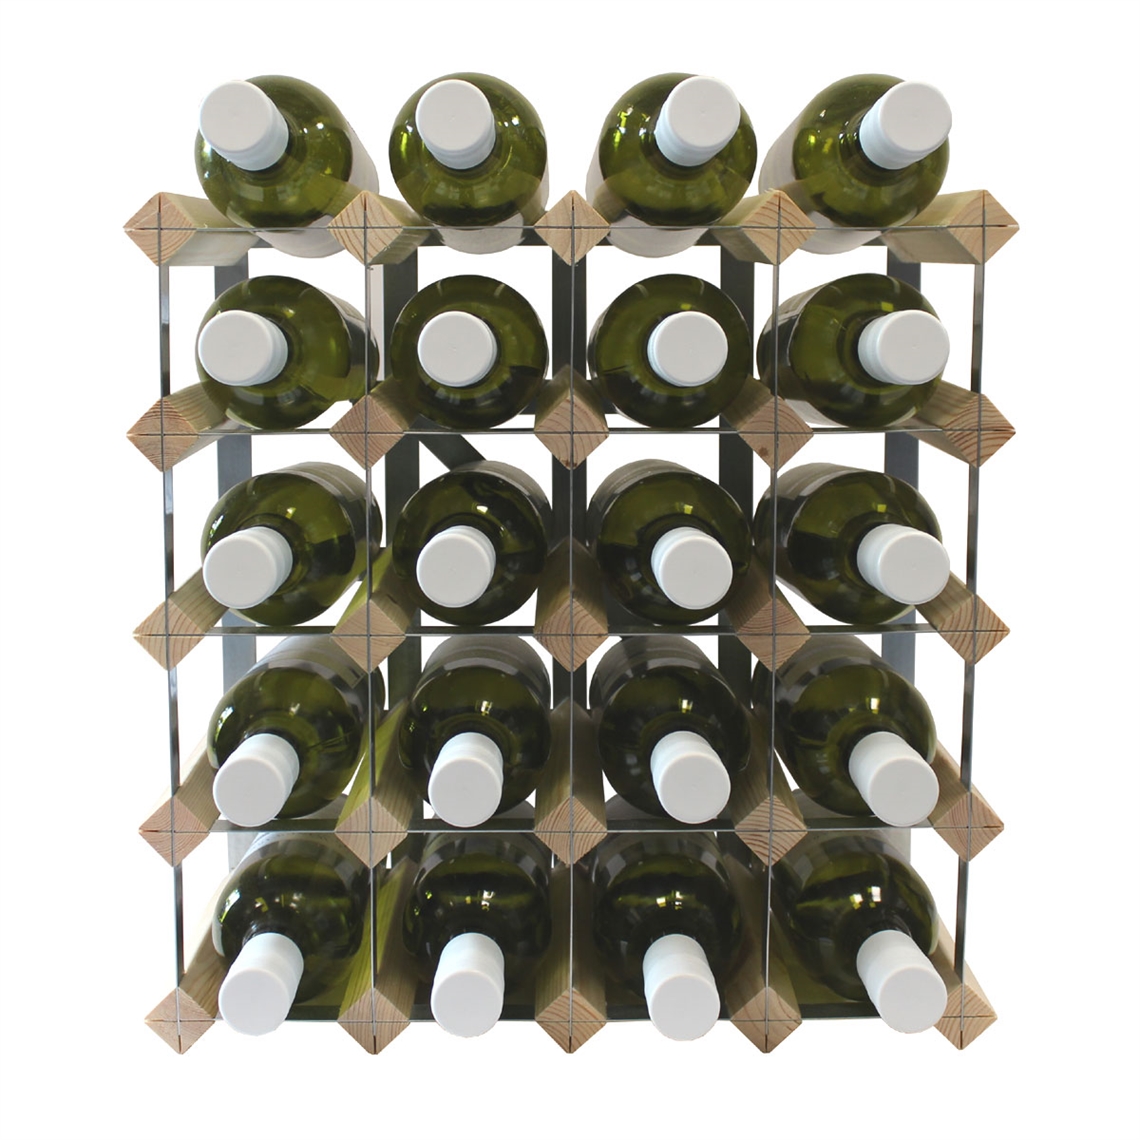 View more bespoke pine wine racks from our Assembled Wine Racks range